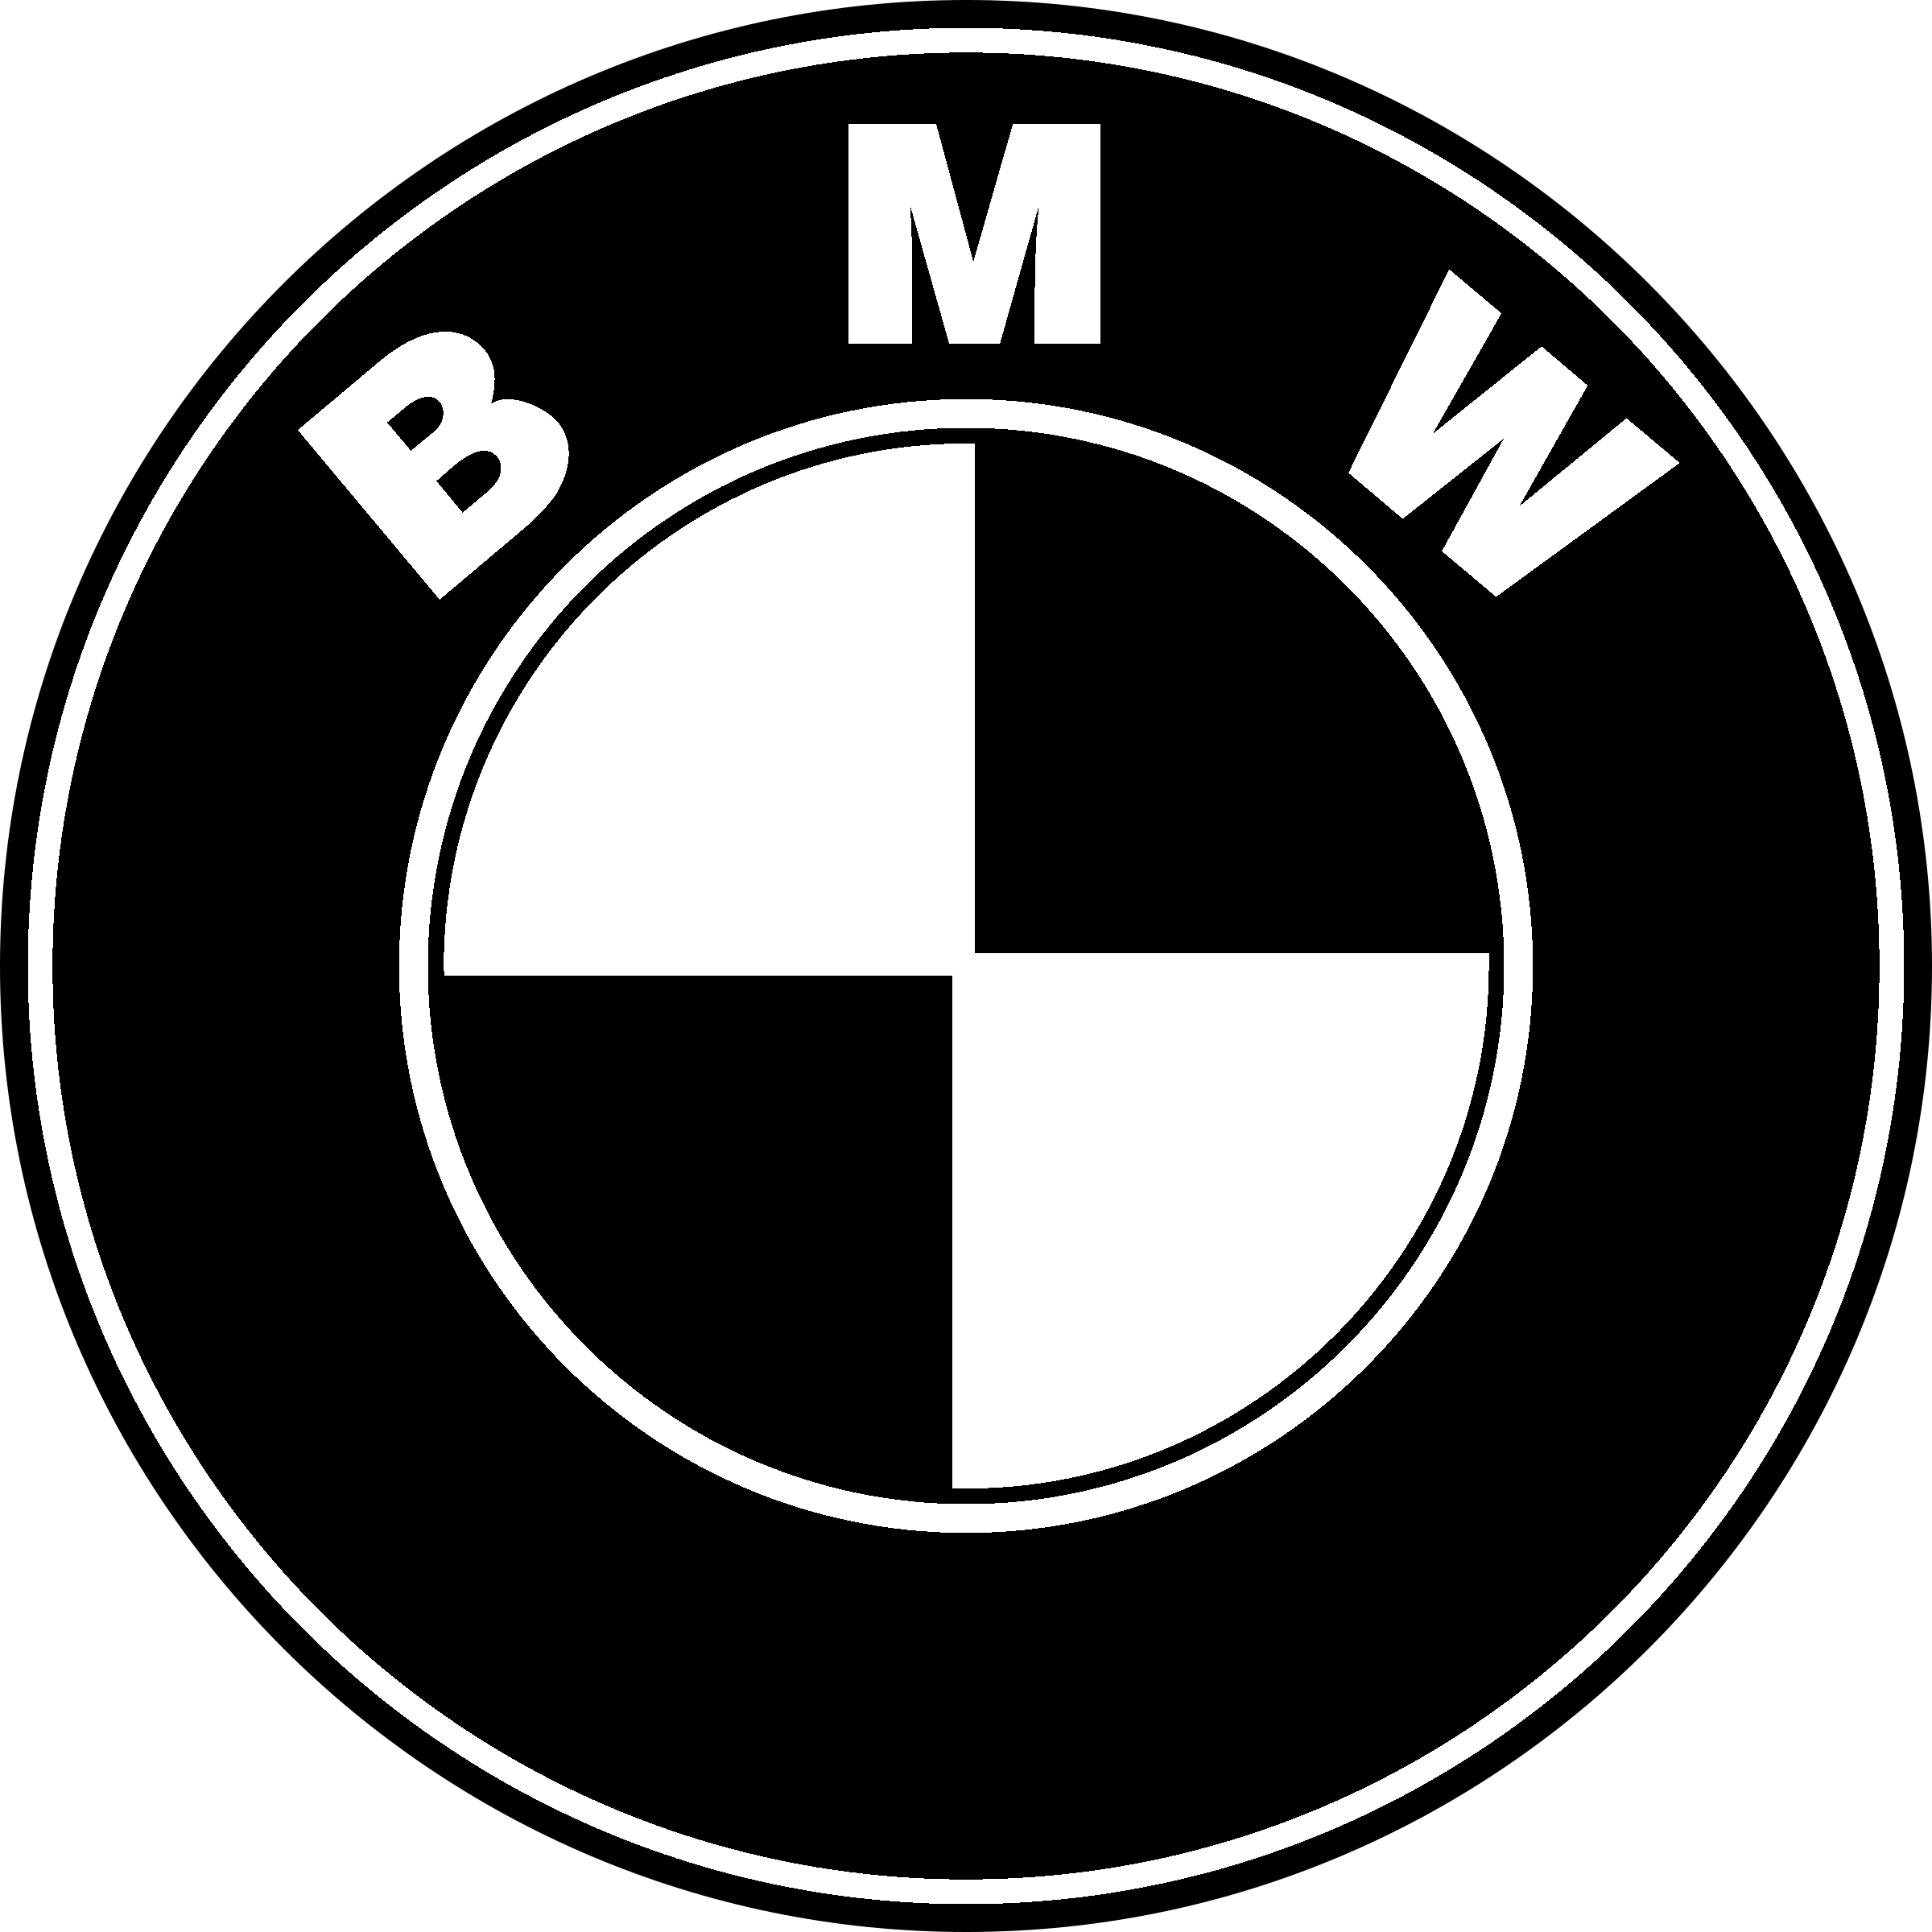 bmw-logo2-logo-black-and-white[1]